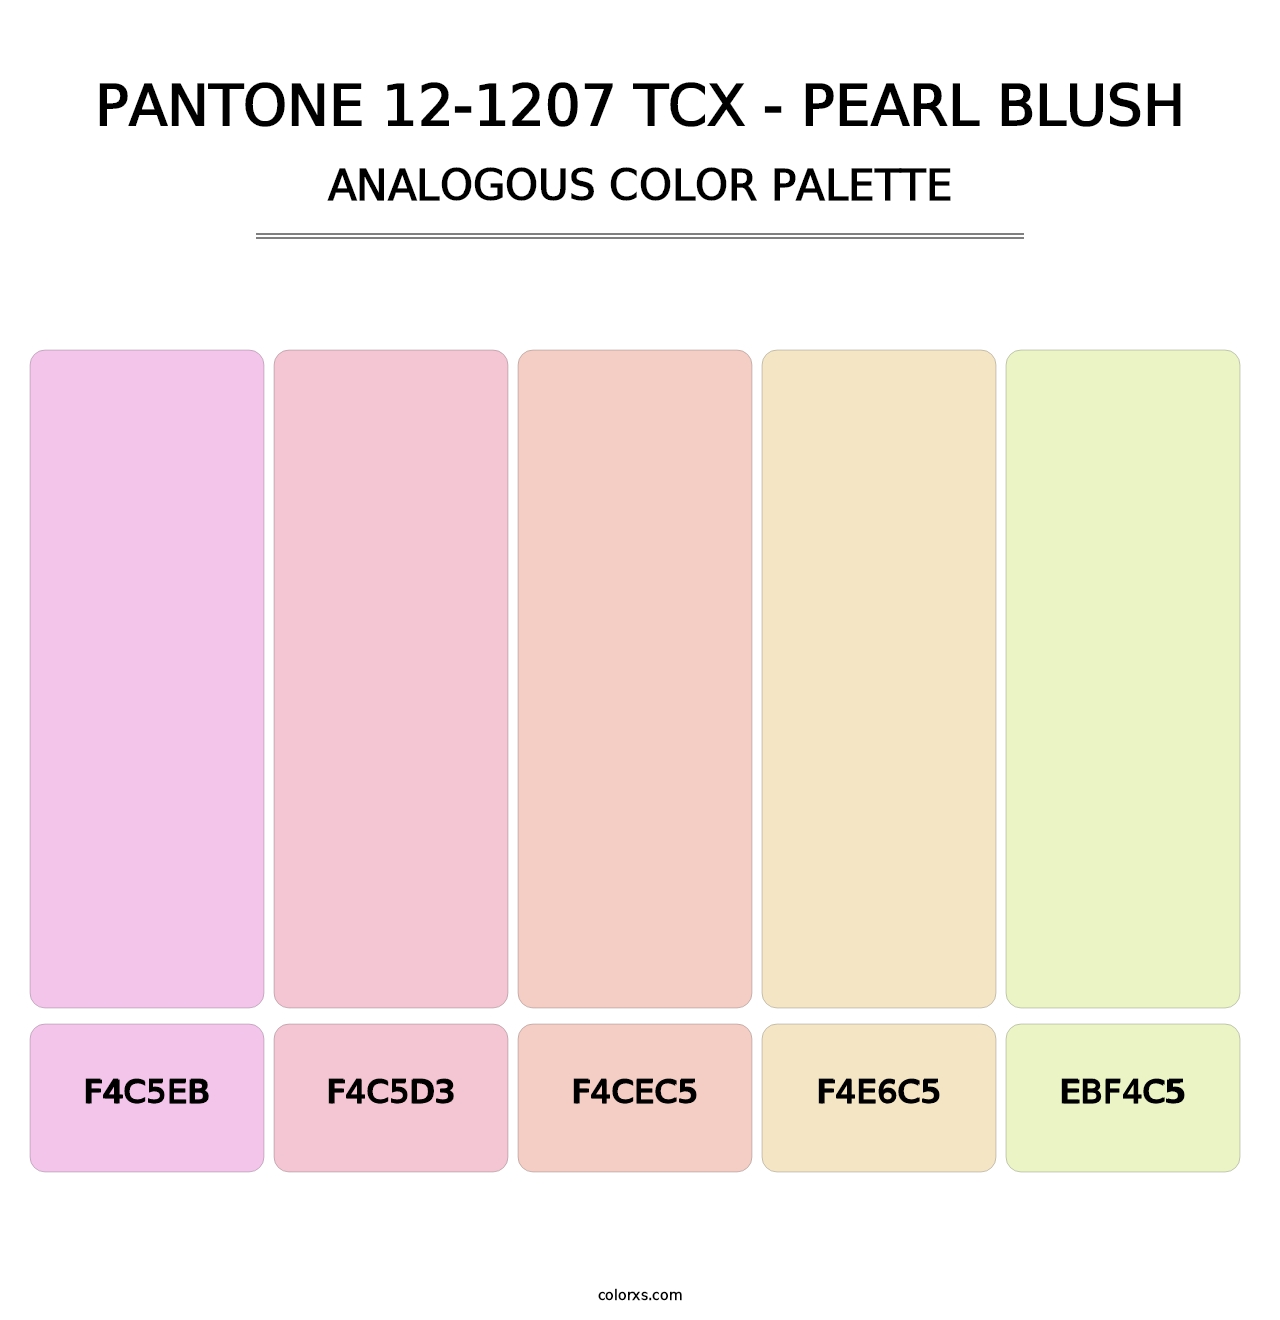 PANTONE 12-1207 TCX - Pearl Blush - Analogous Color Palette